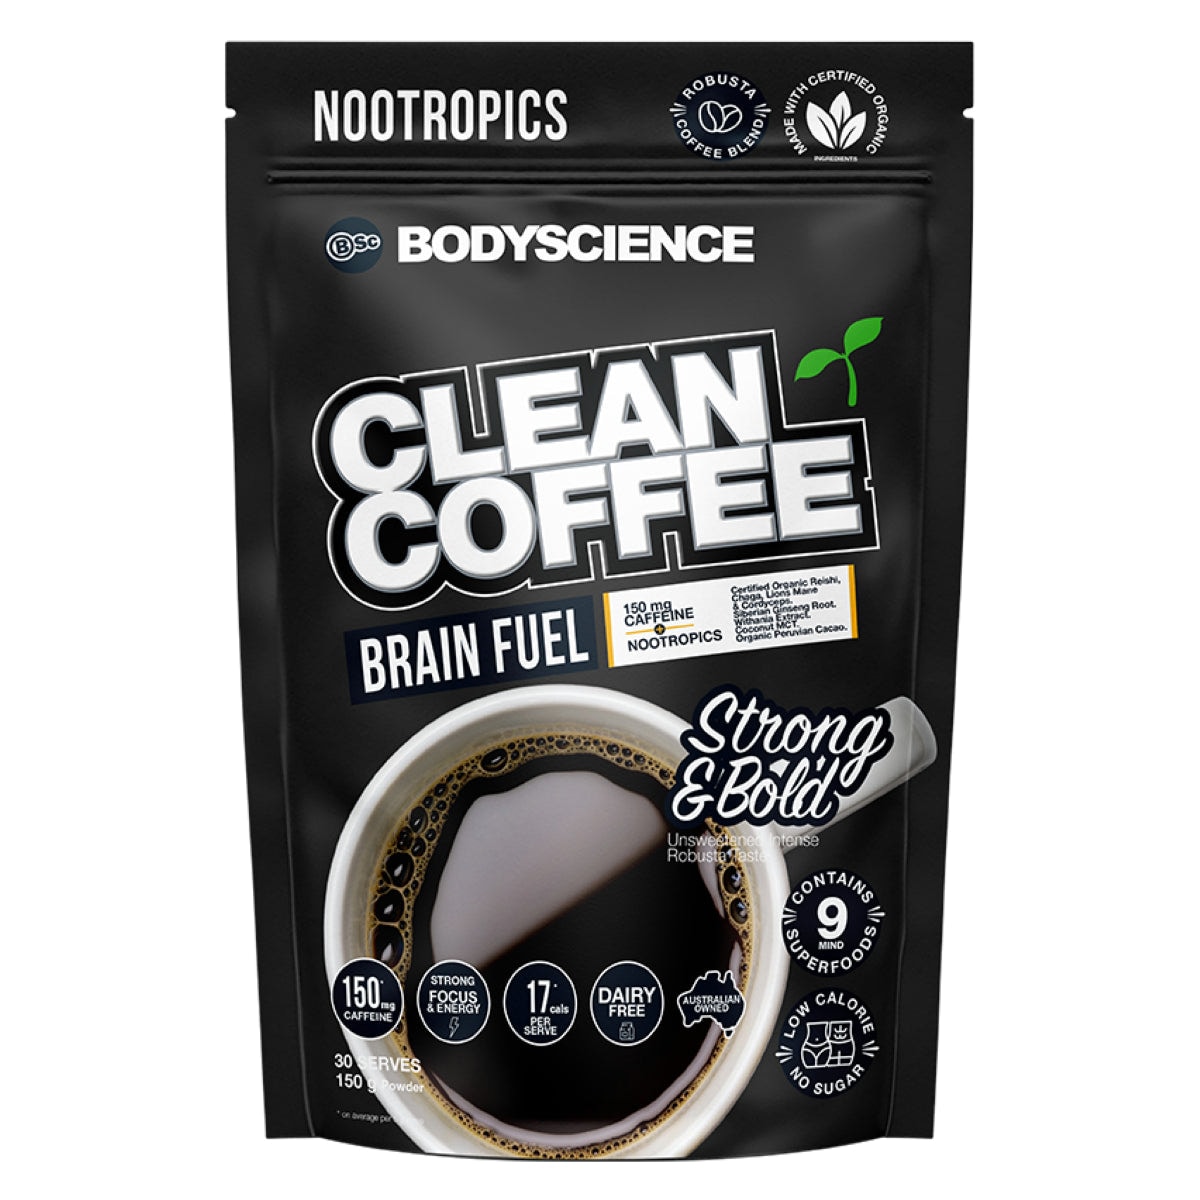 BSc Body Science Clean Coffee Brain Fuel 150g